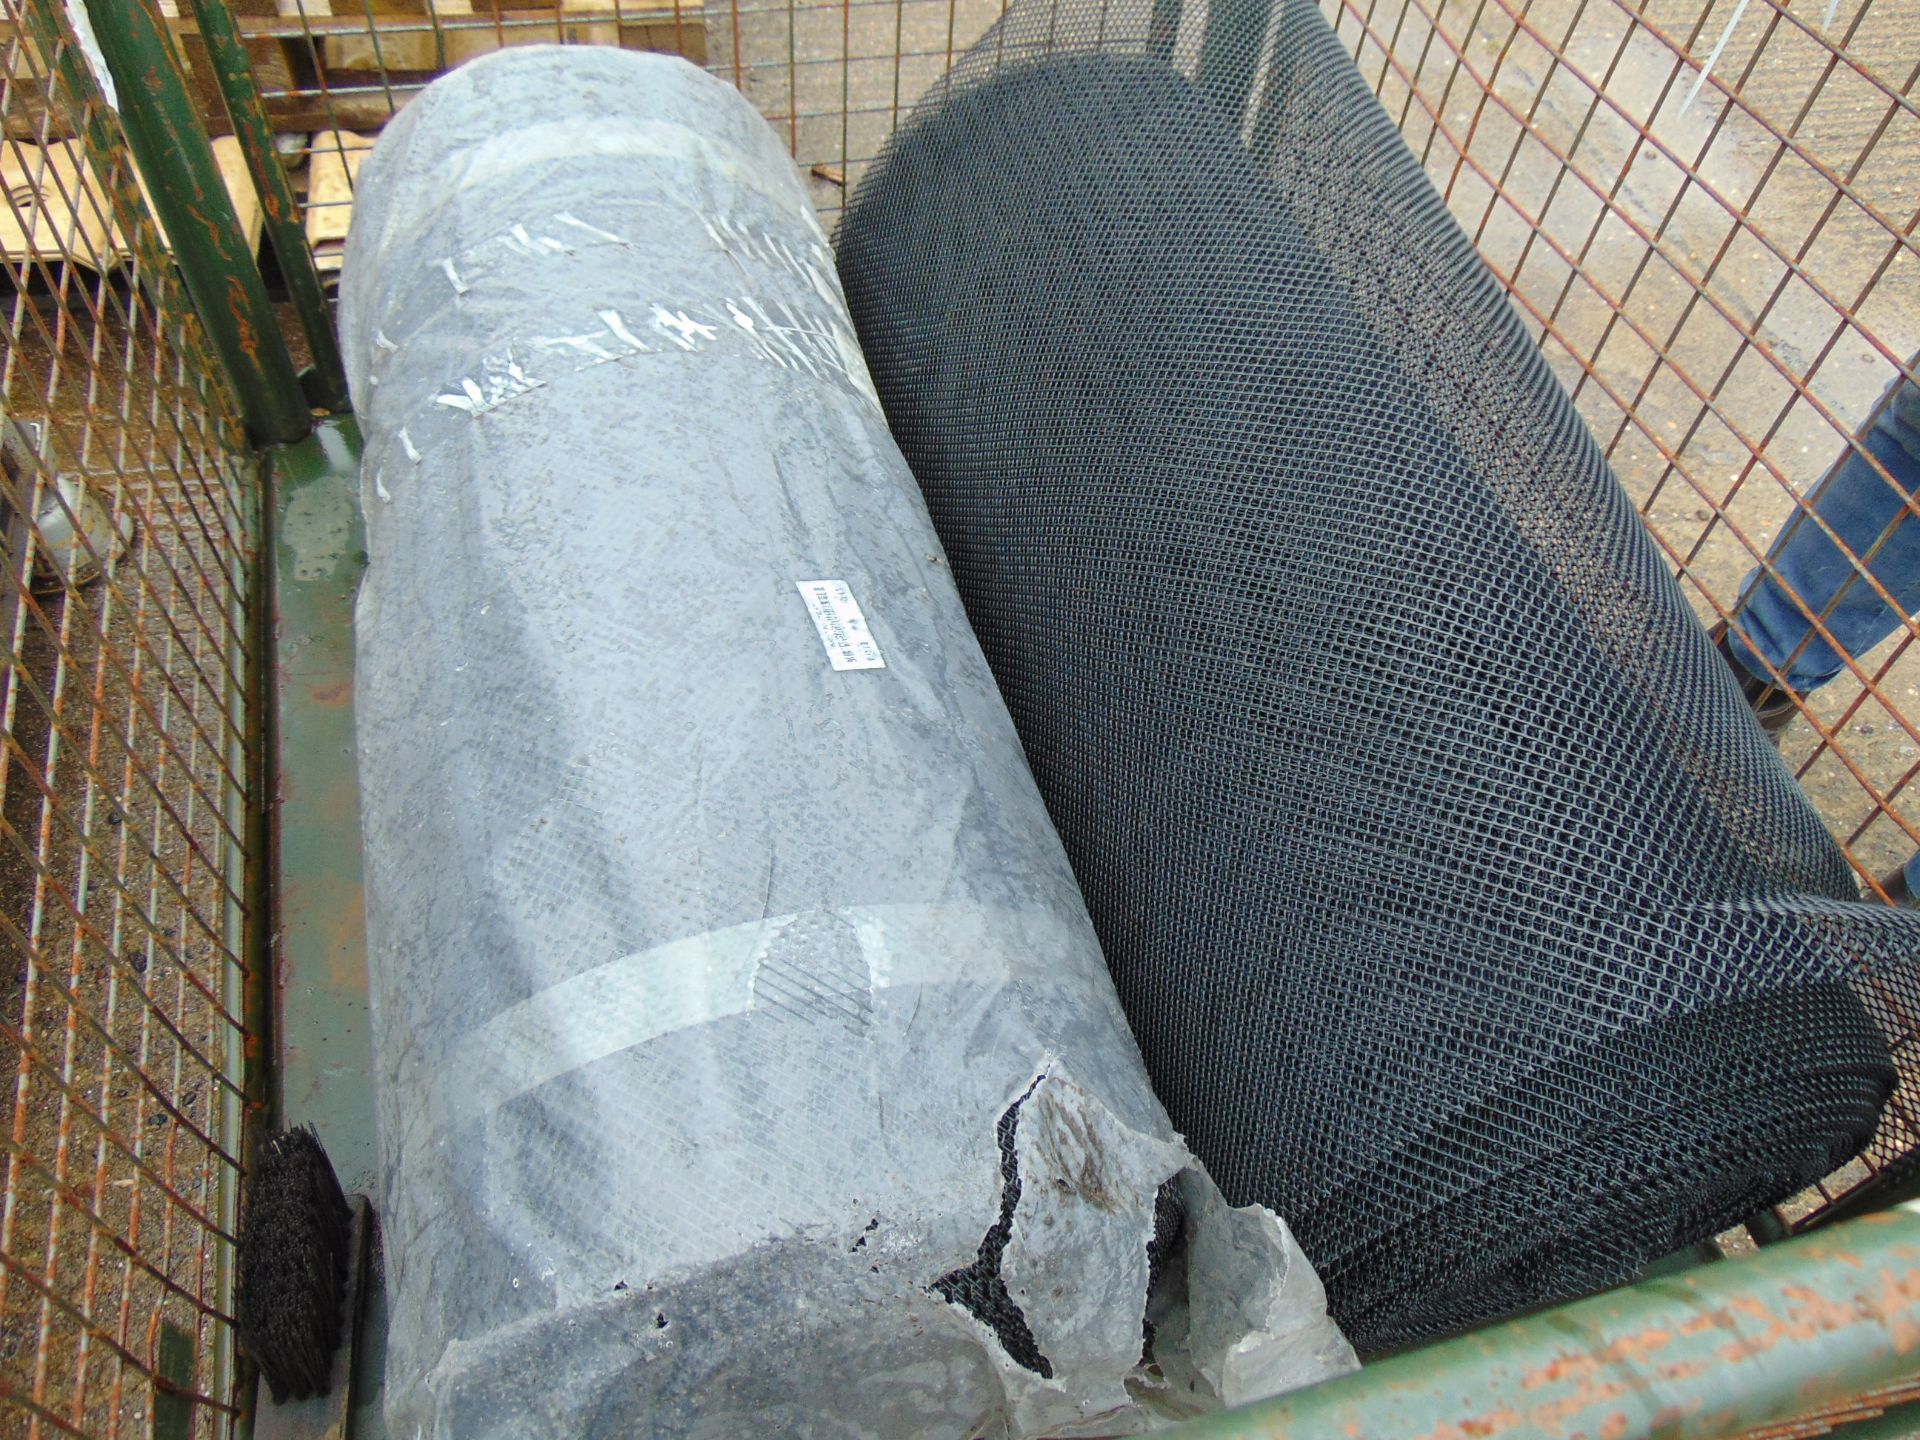 2 x New Unissued Rolls of Plastic Netting Approx 100m + 1m